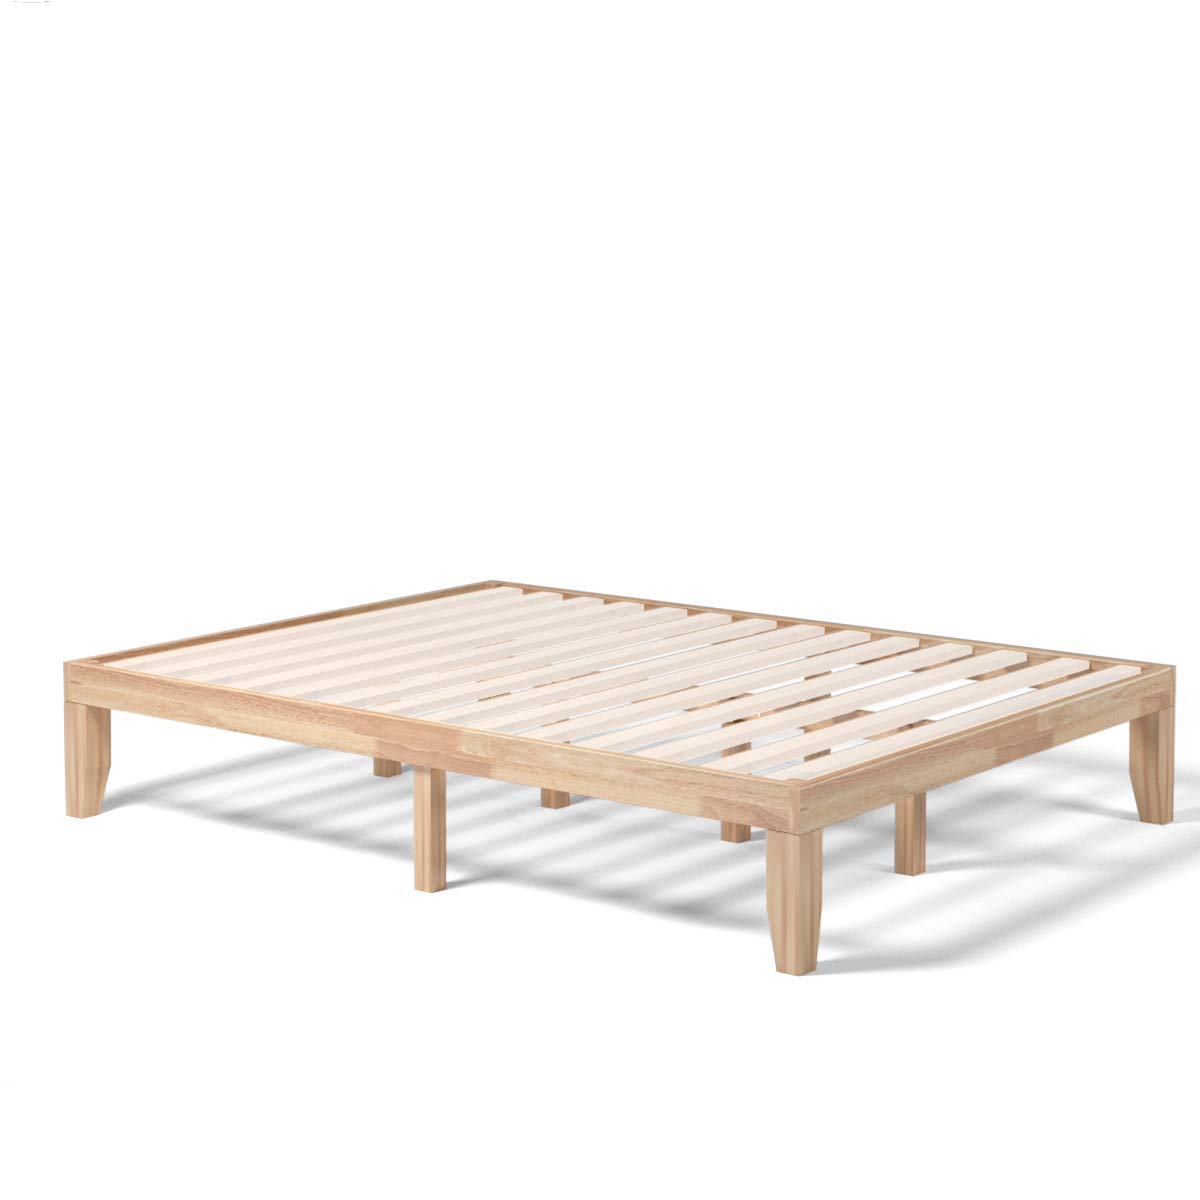 No Box Spring Needed 14 Inch Solid Wood Platform Bed Frame